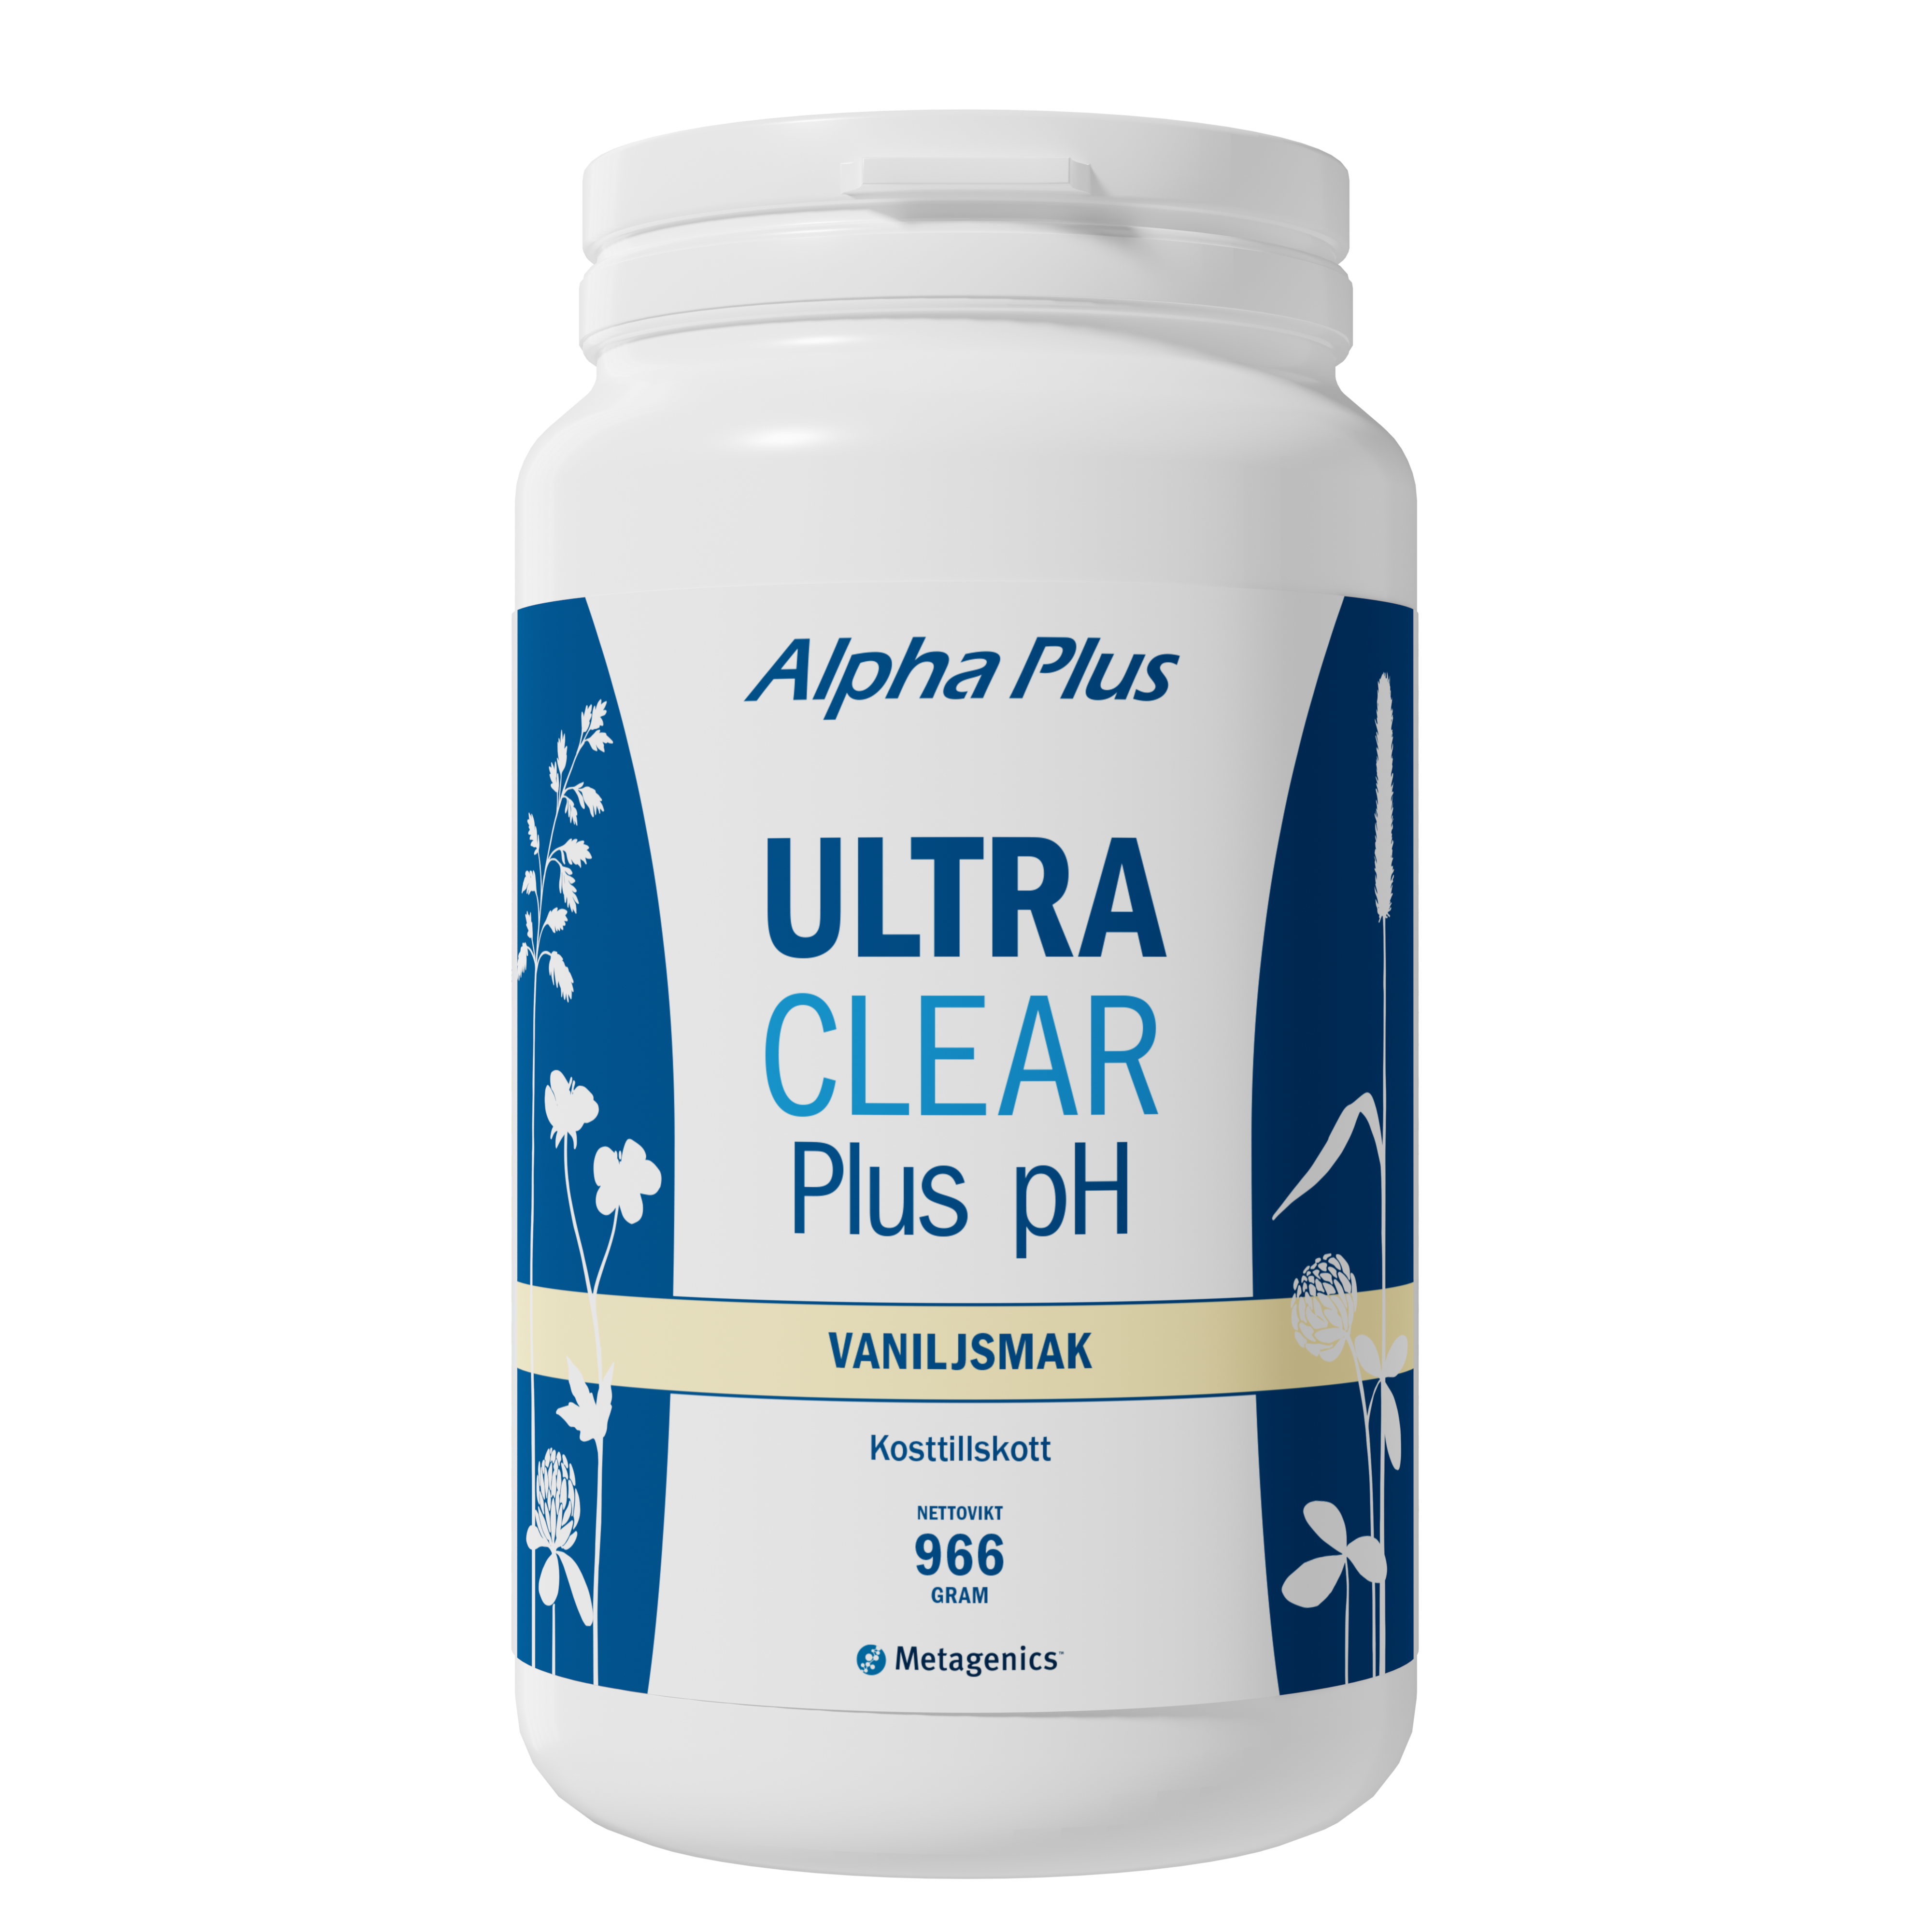 Alpha Plus UltraClear Plus pH Vanilj 966 g